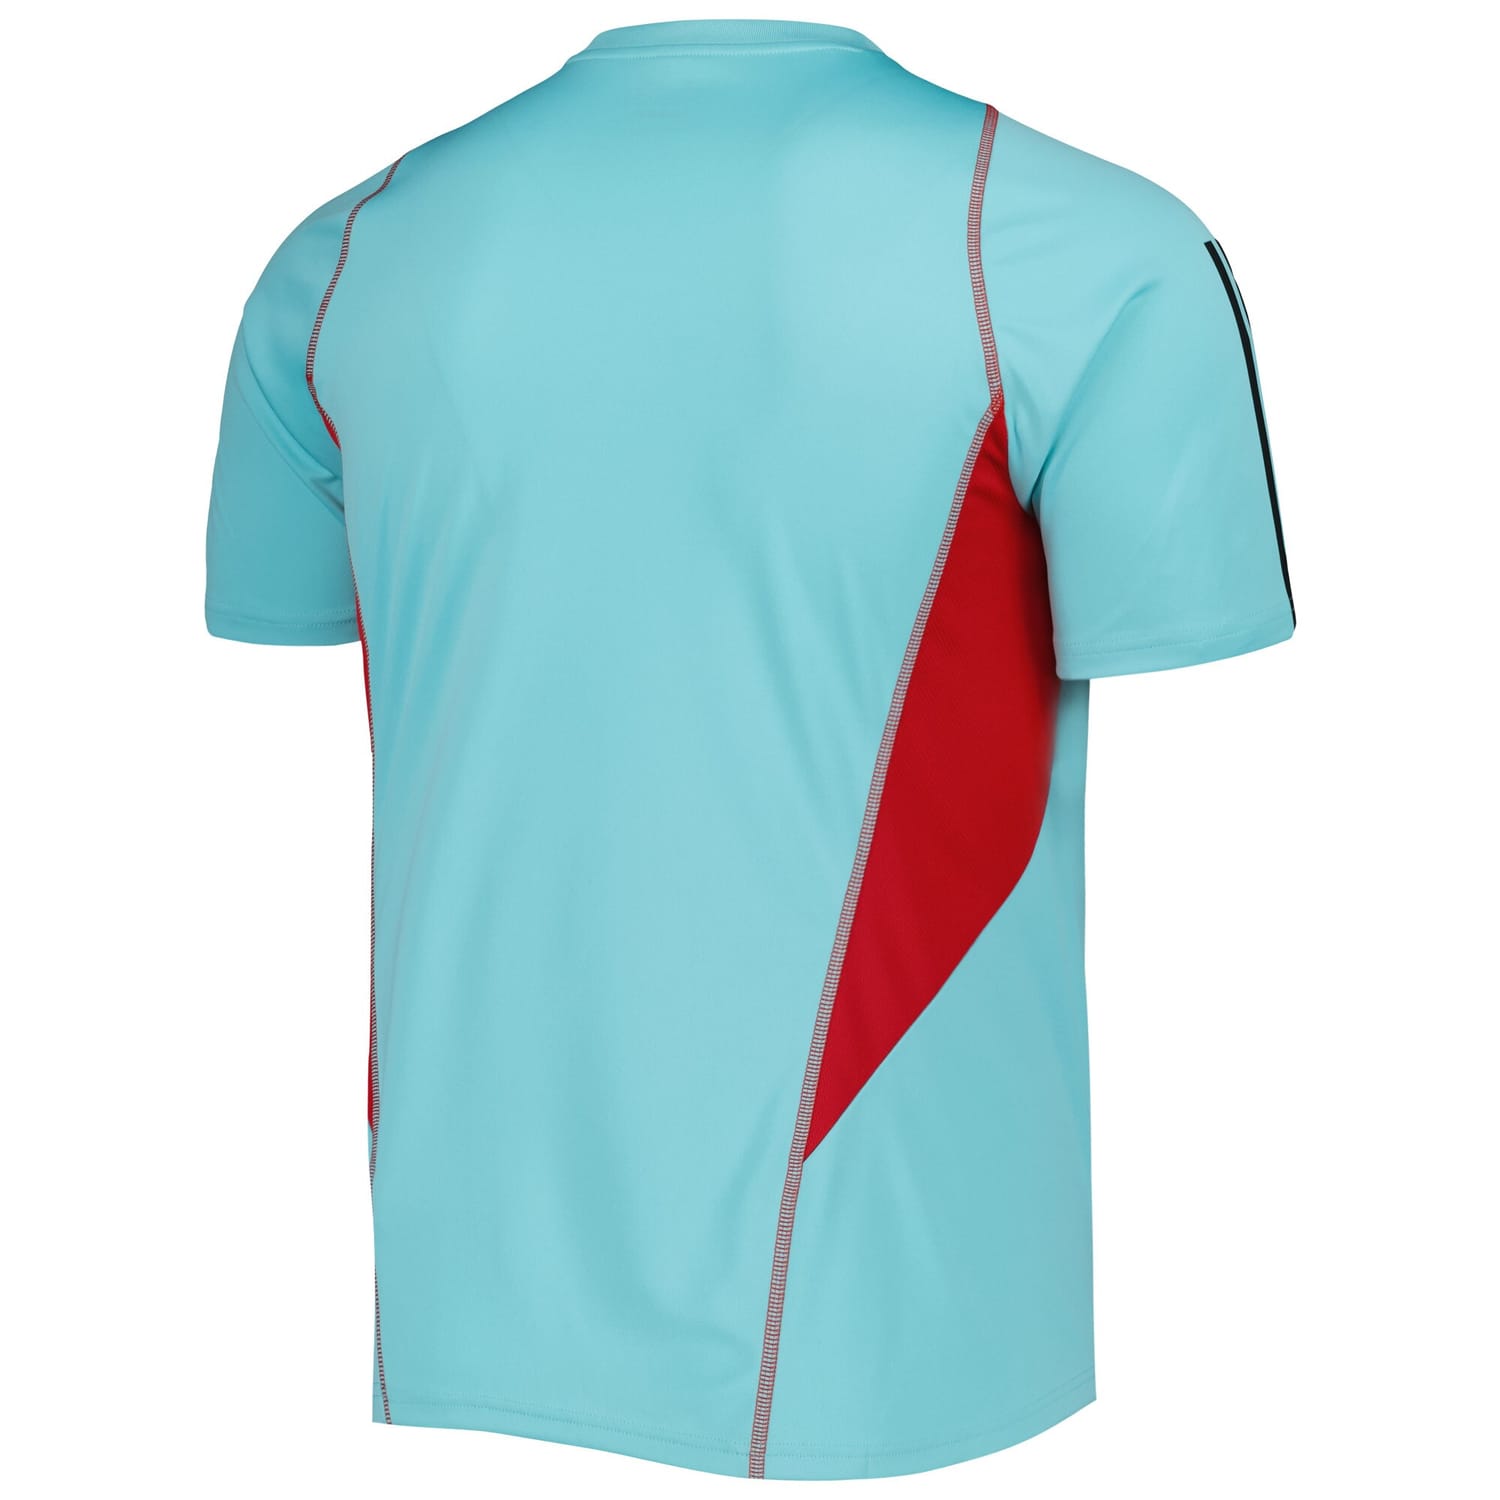 Colombia National Team Training Jersey Shirt Aqua for Men